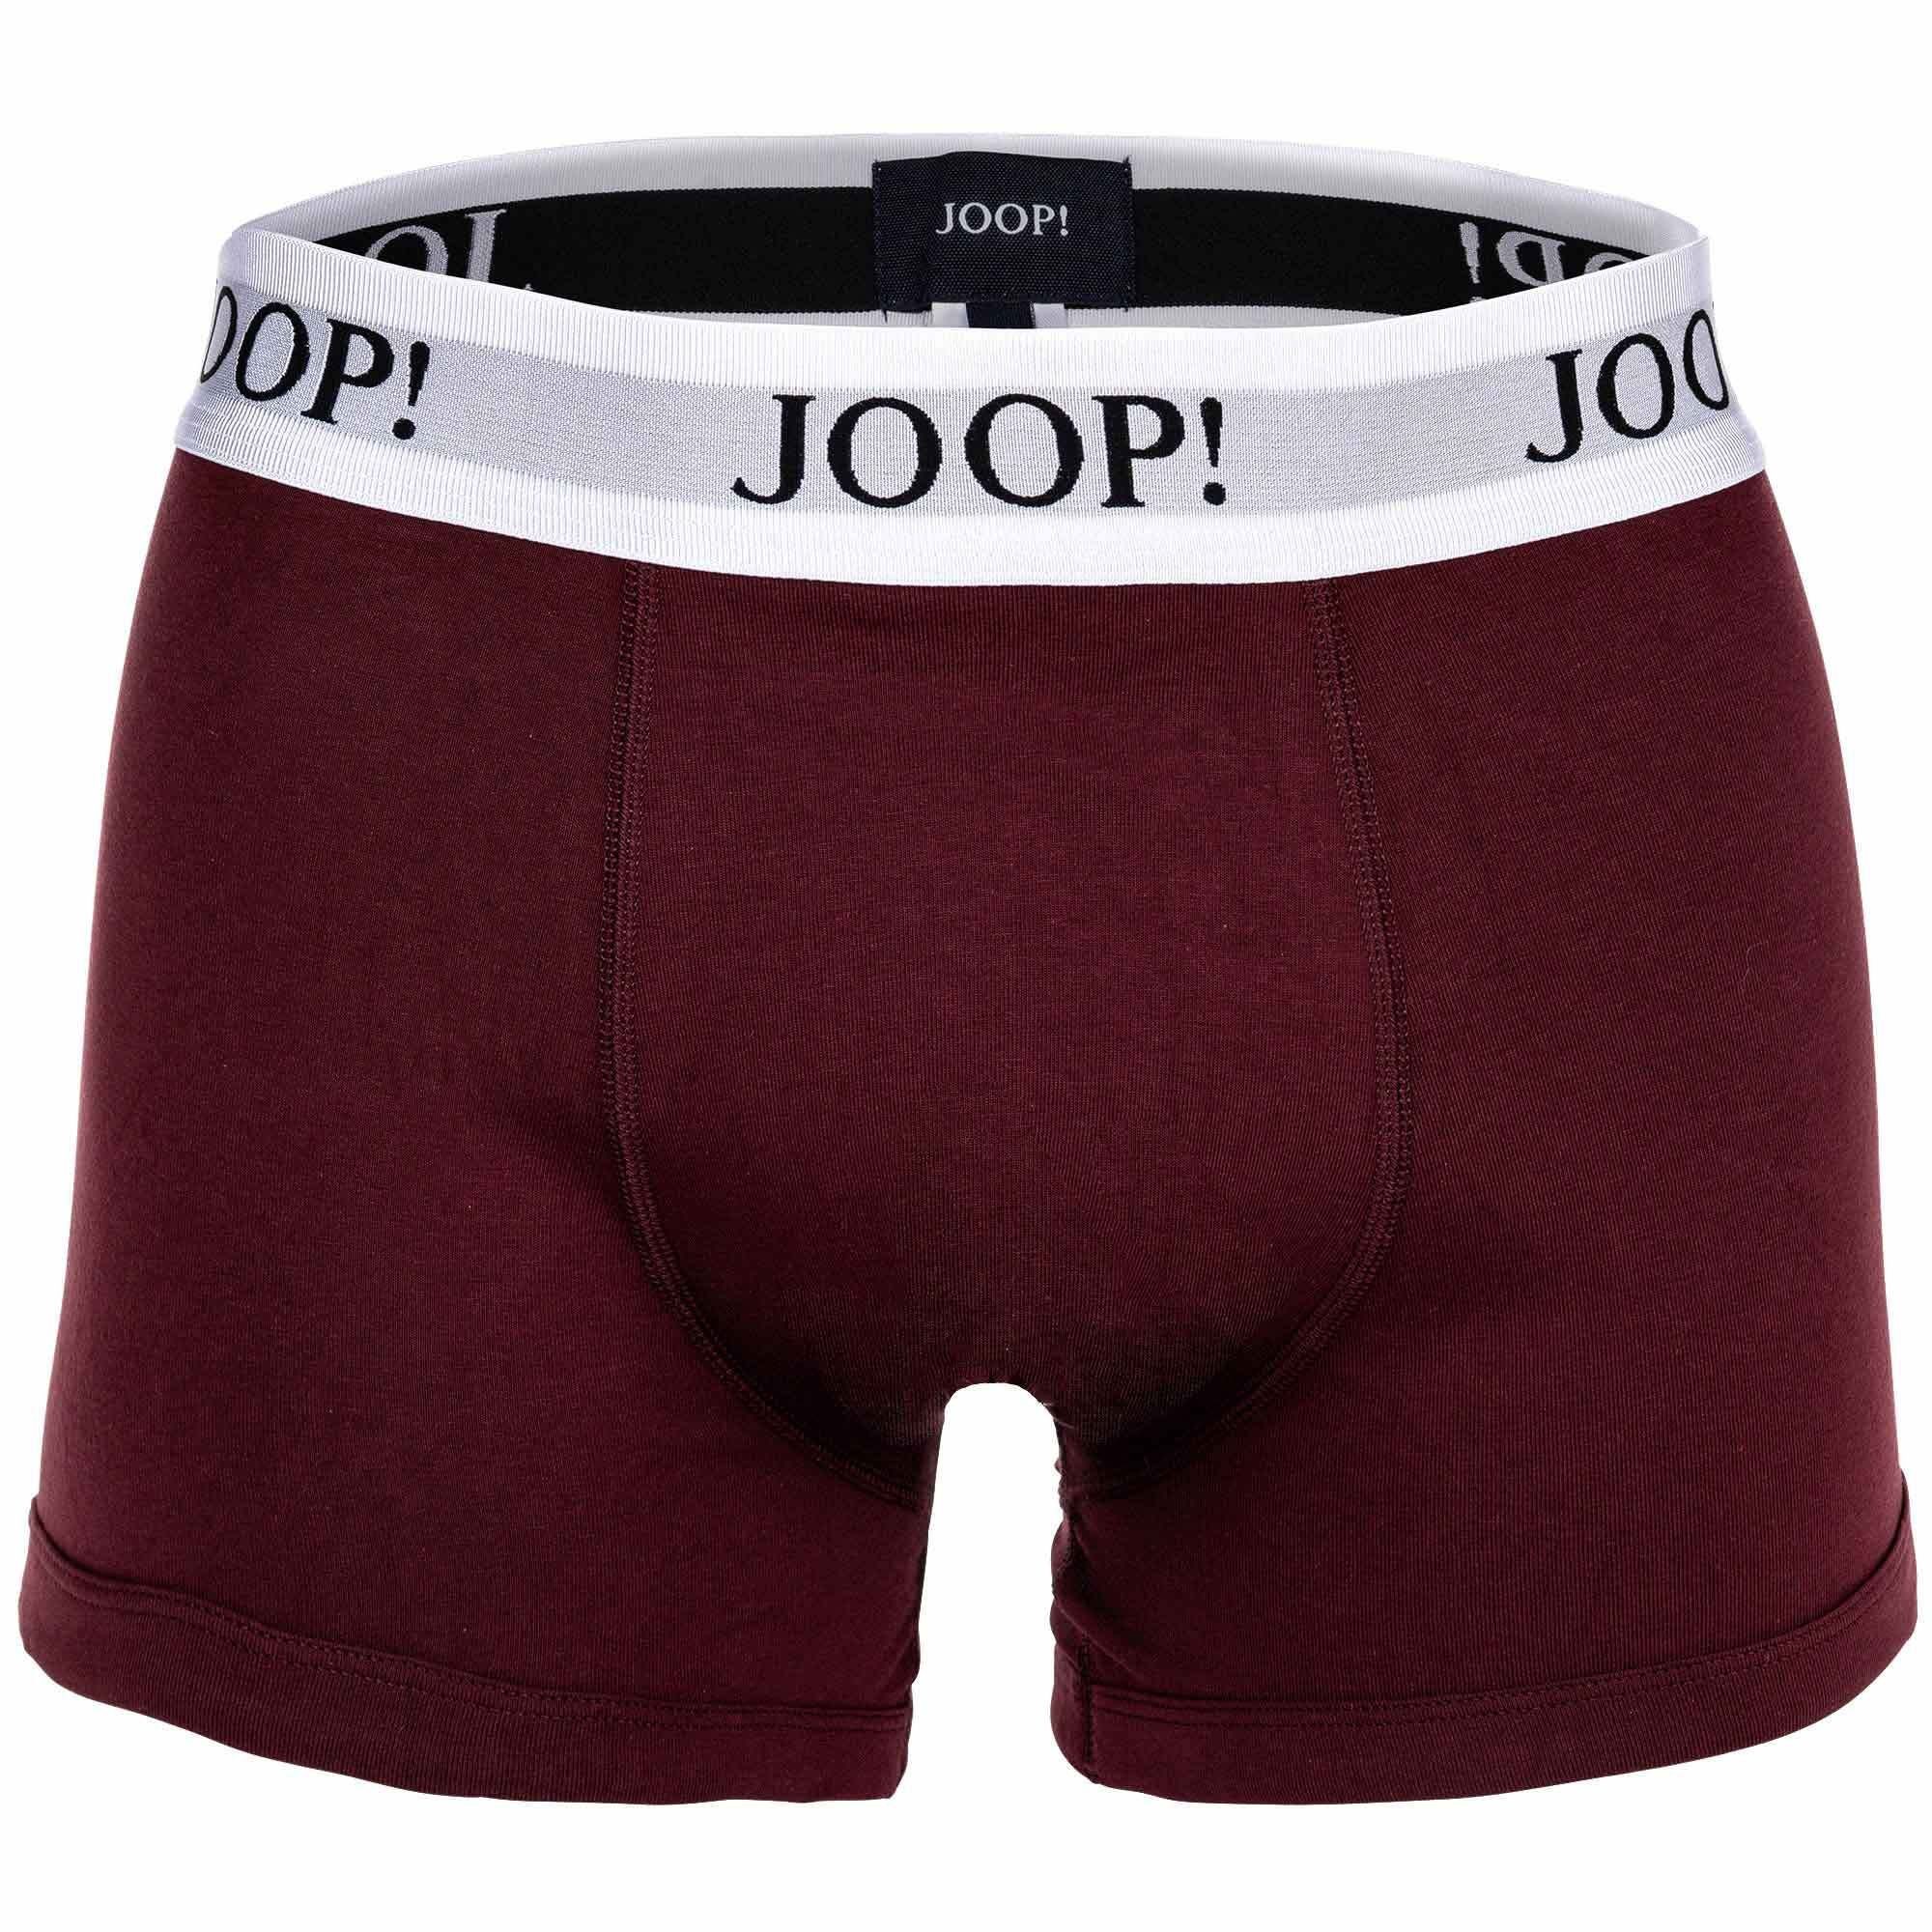 Fine 3er Boxershorts, - Herren Pack Cotton Trunks, Boxer Joop!